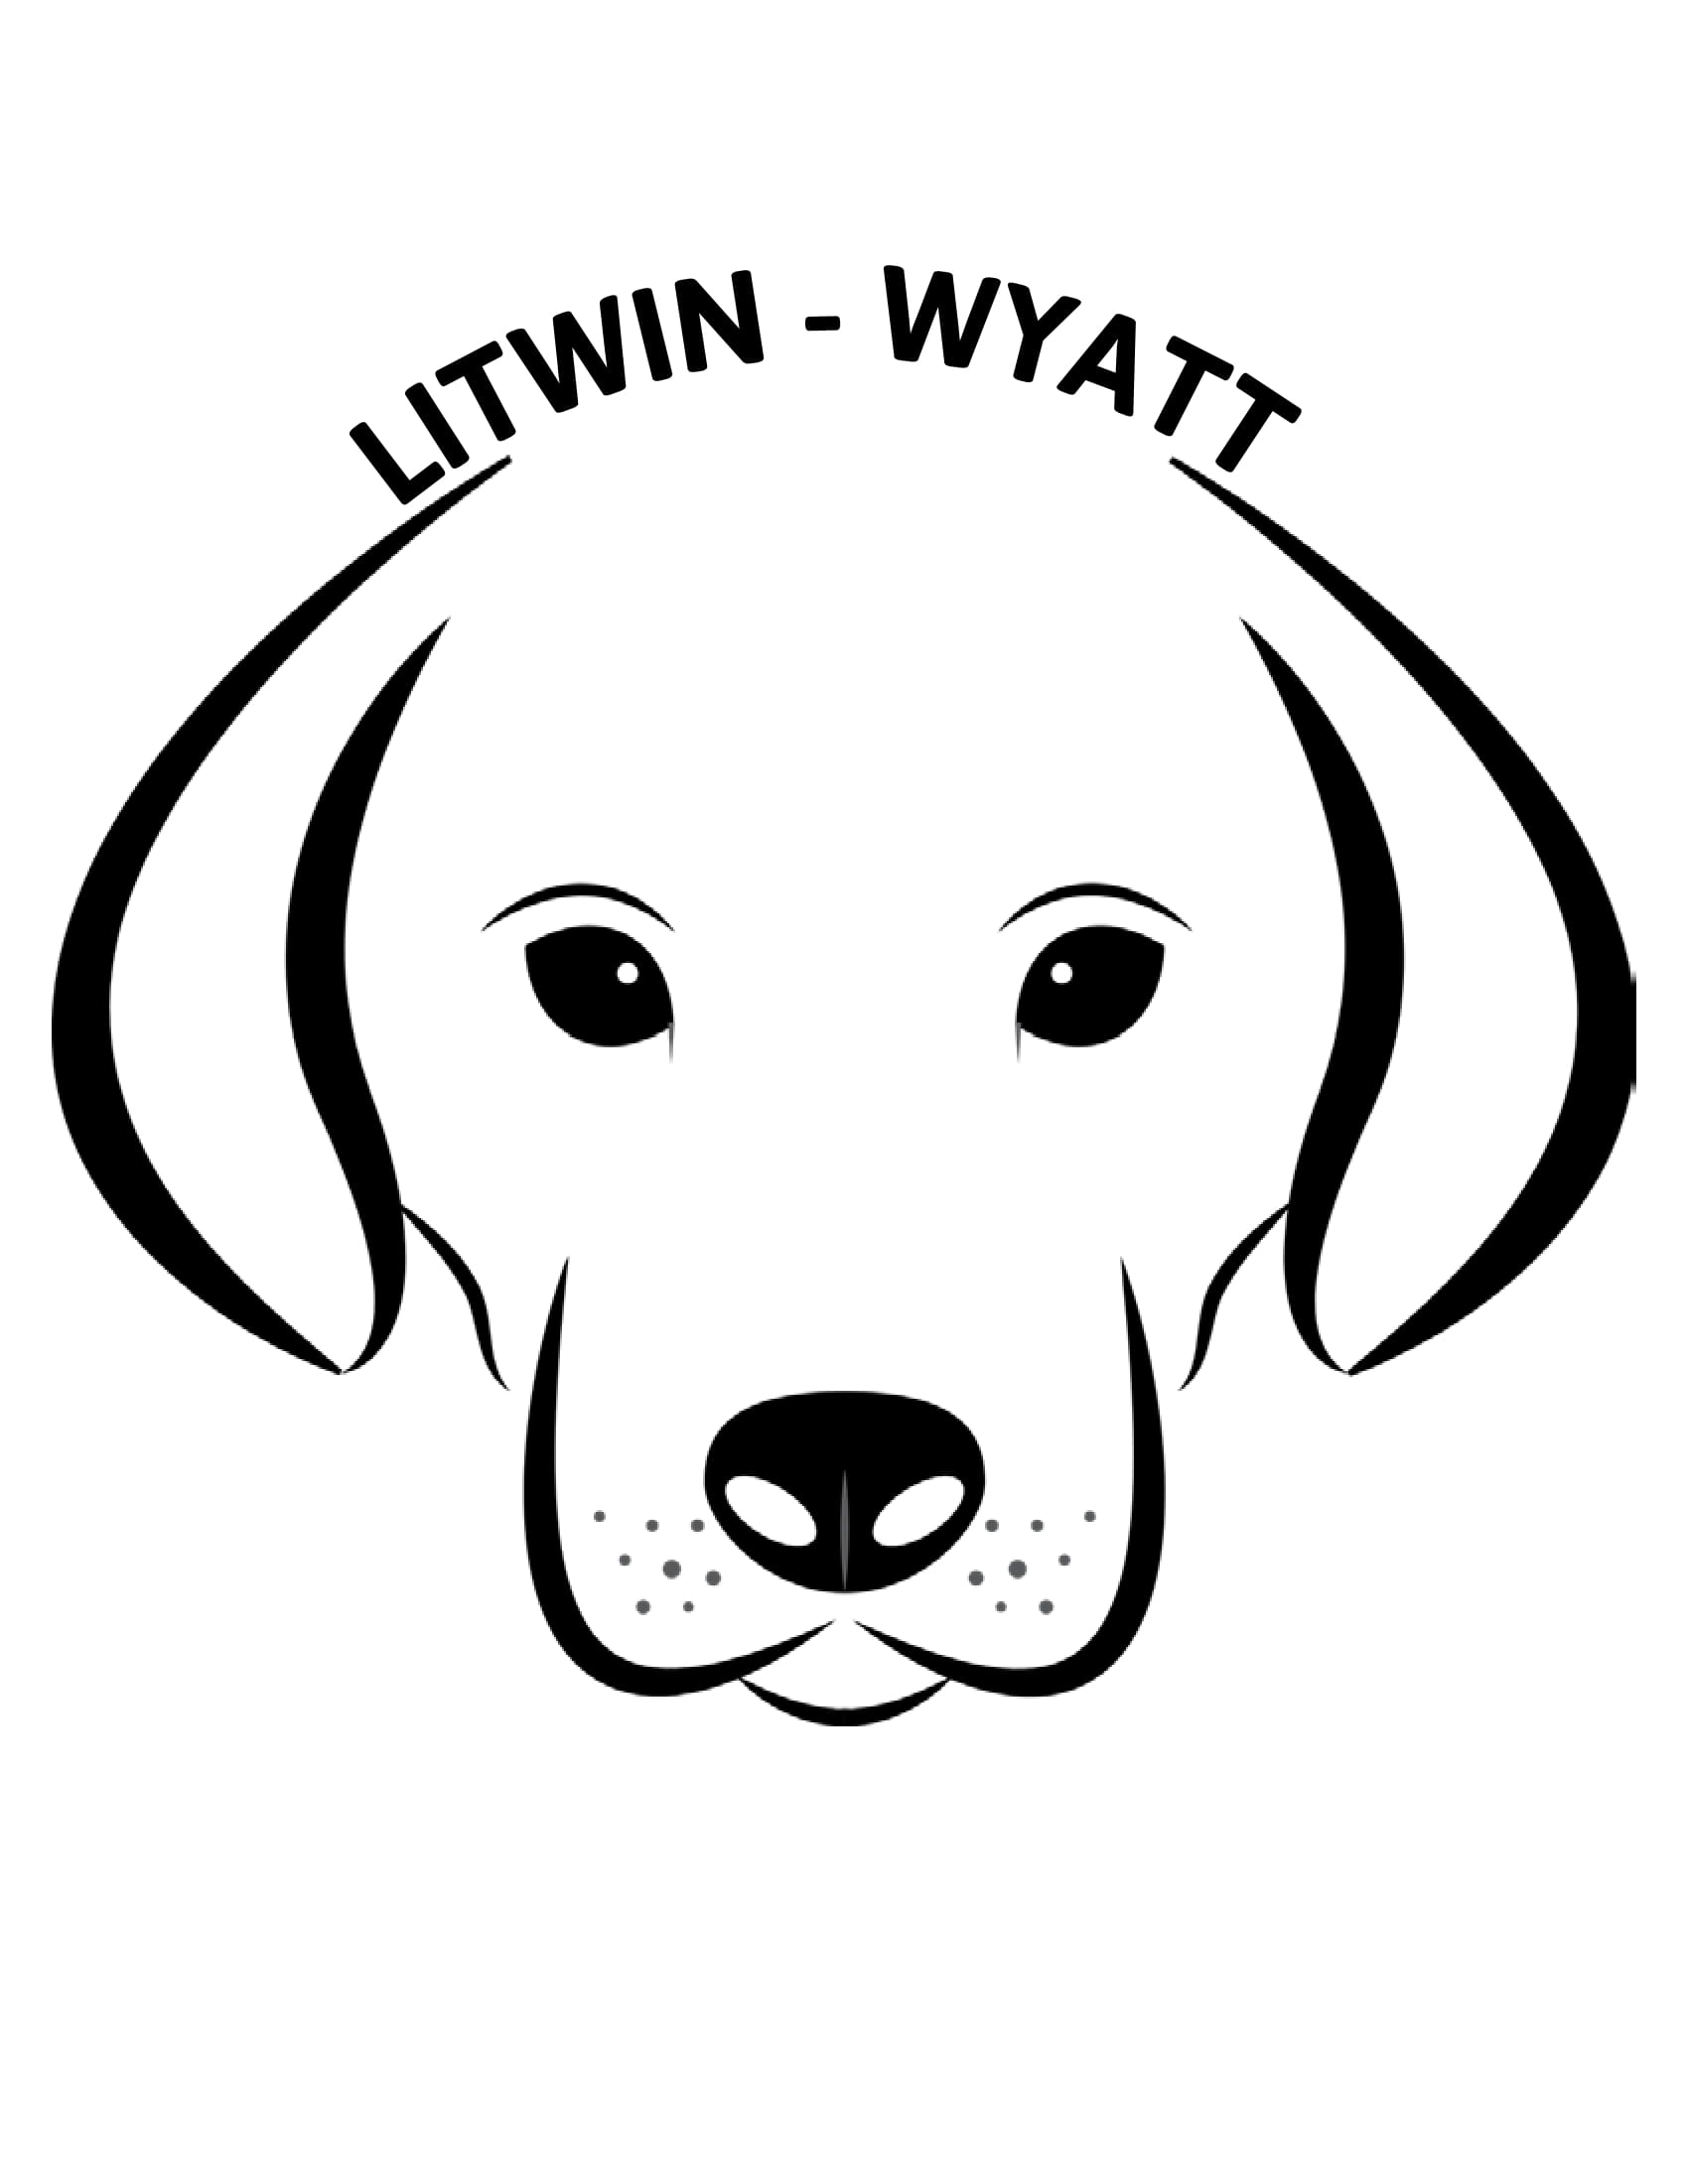 Litwin-Wyatt